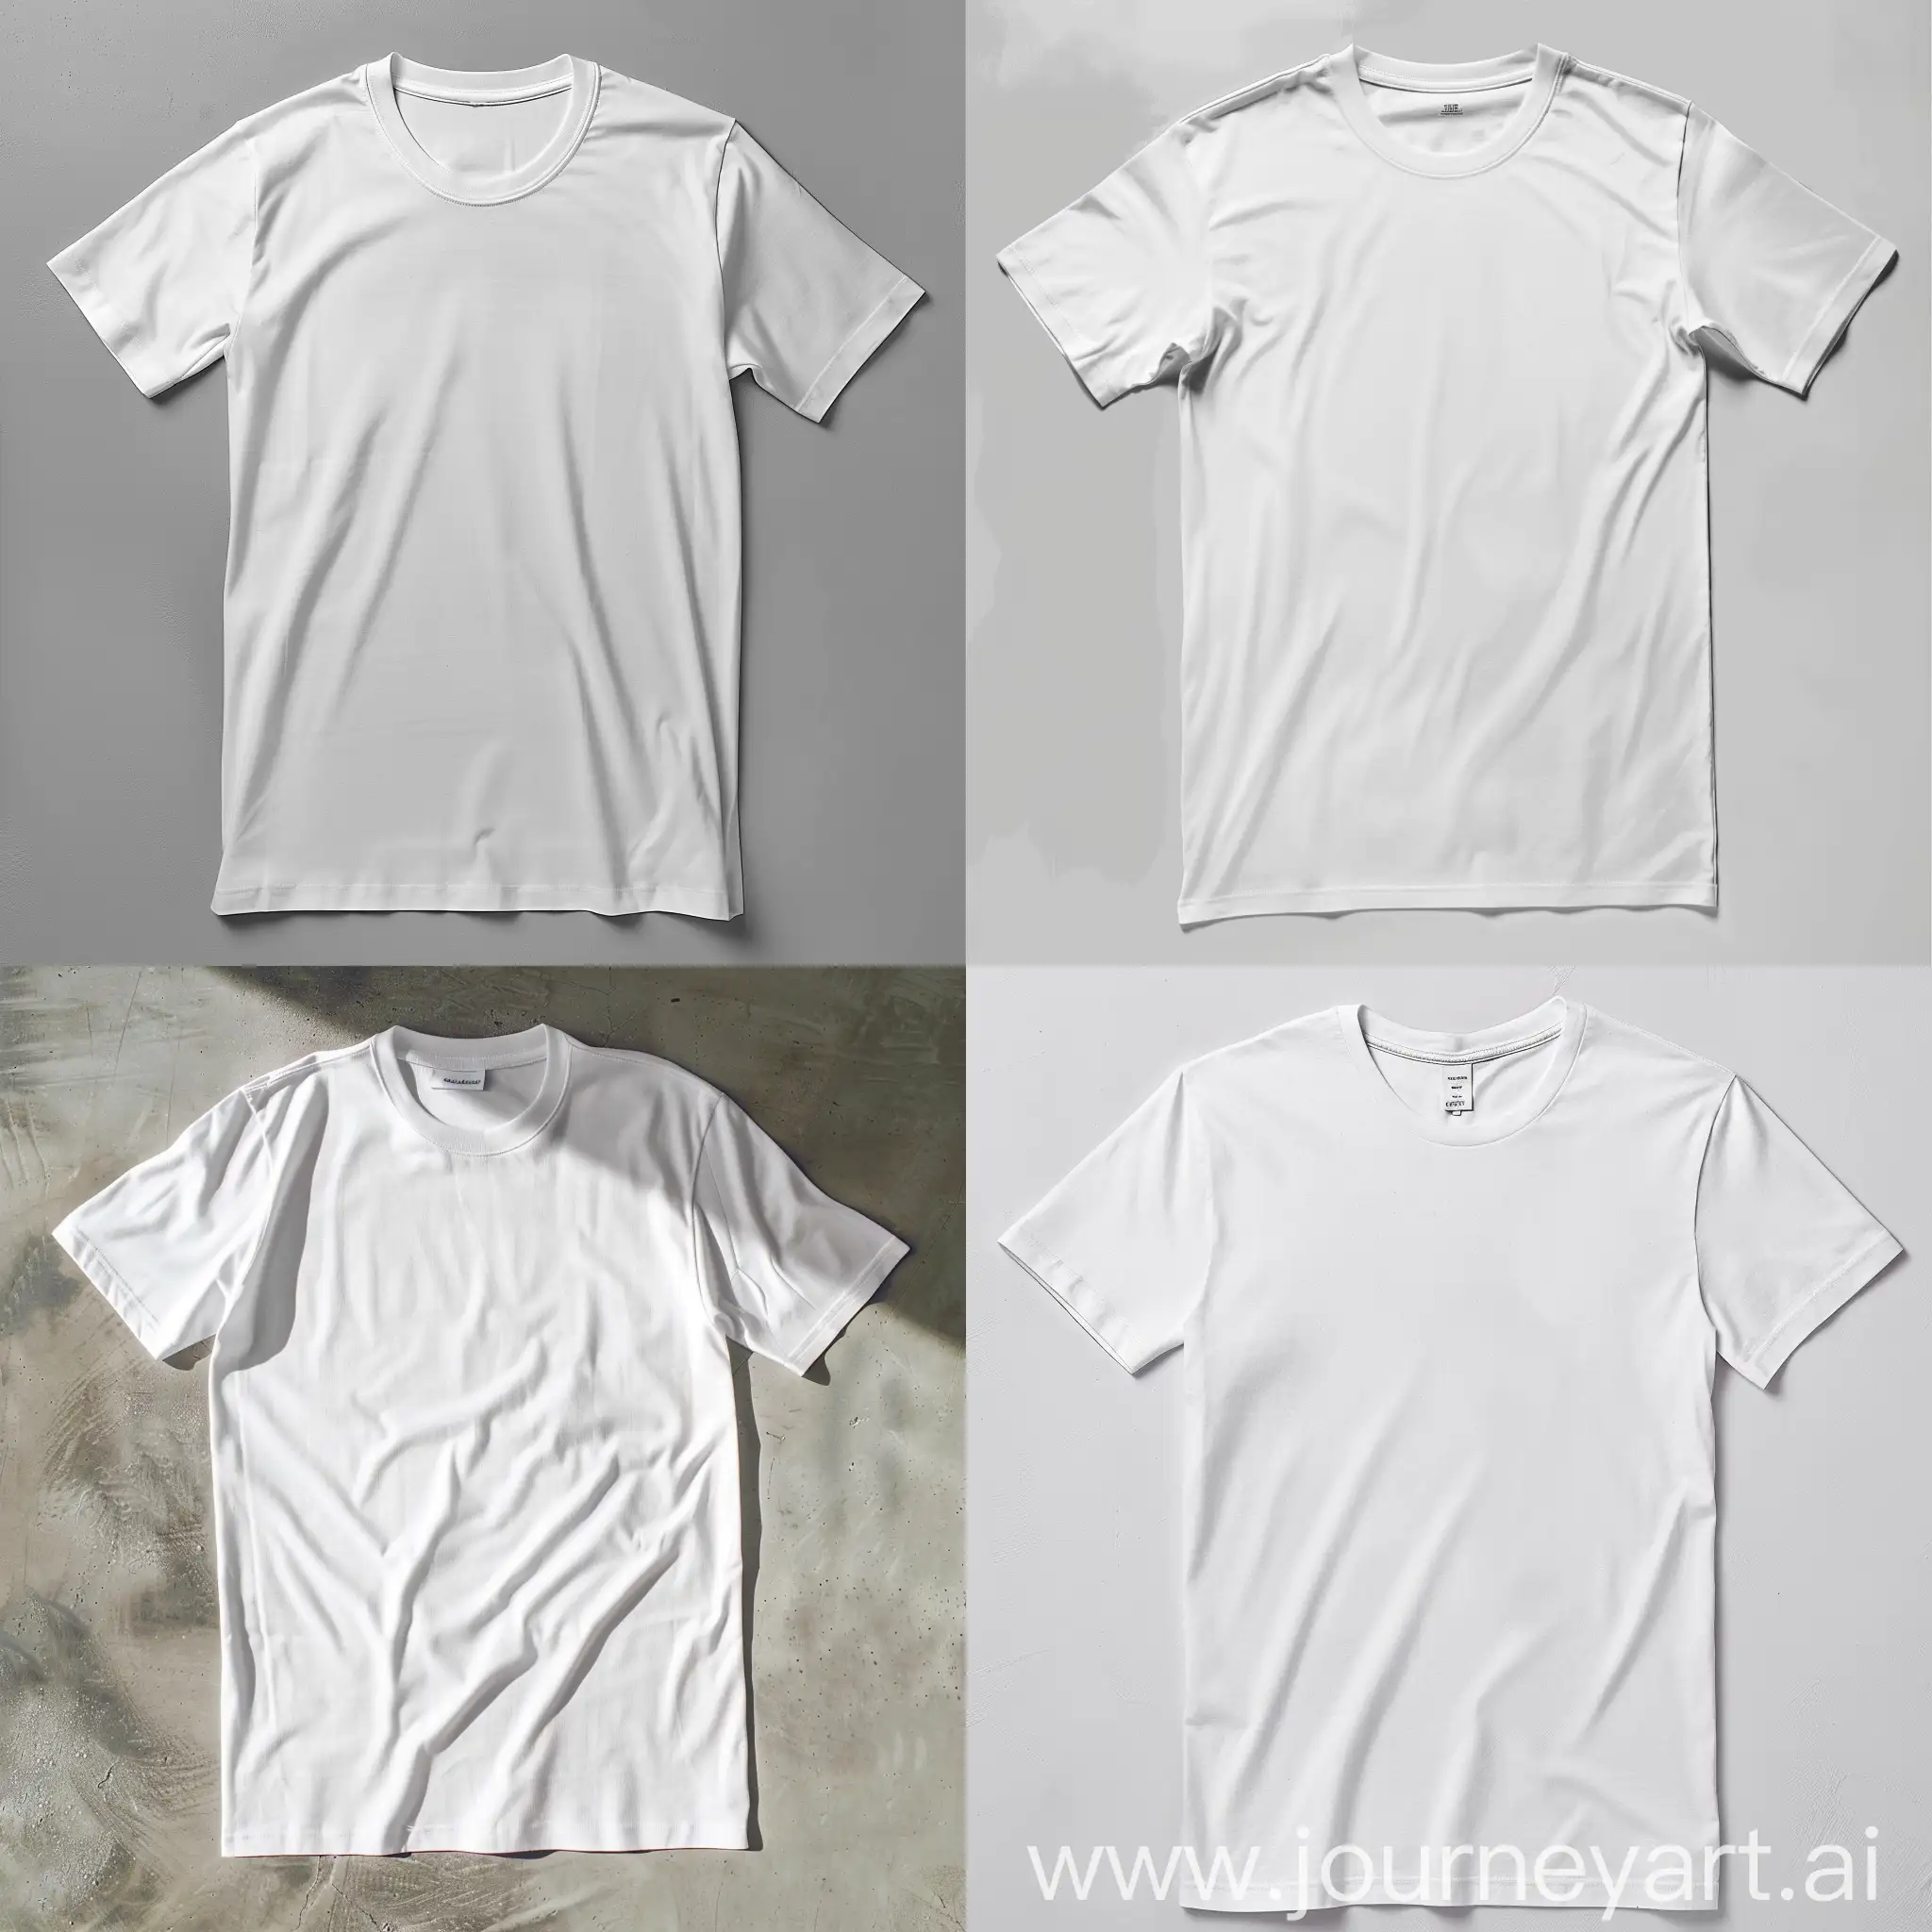 Realistic-White-TShirt-Mockup-Gildan-5000-HighQuality-Apparel-Template